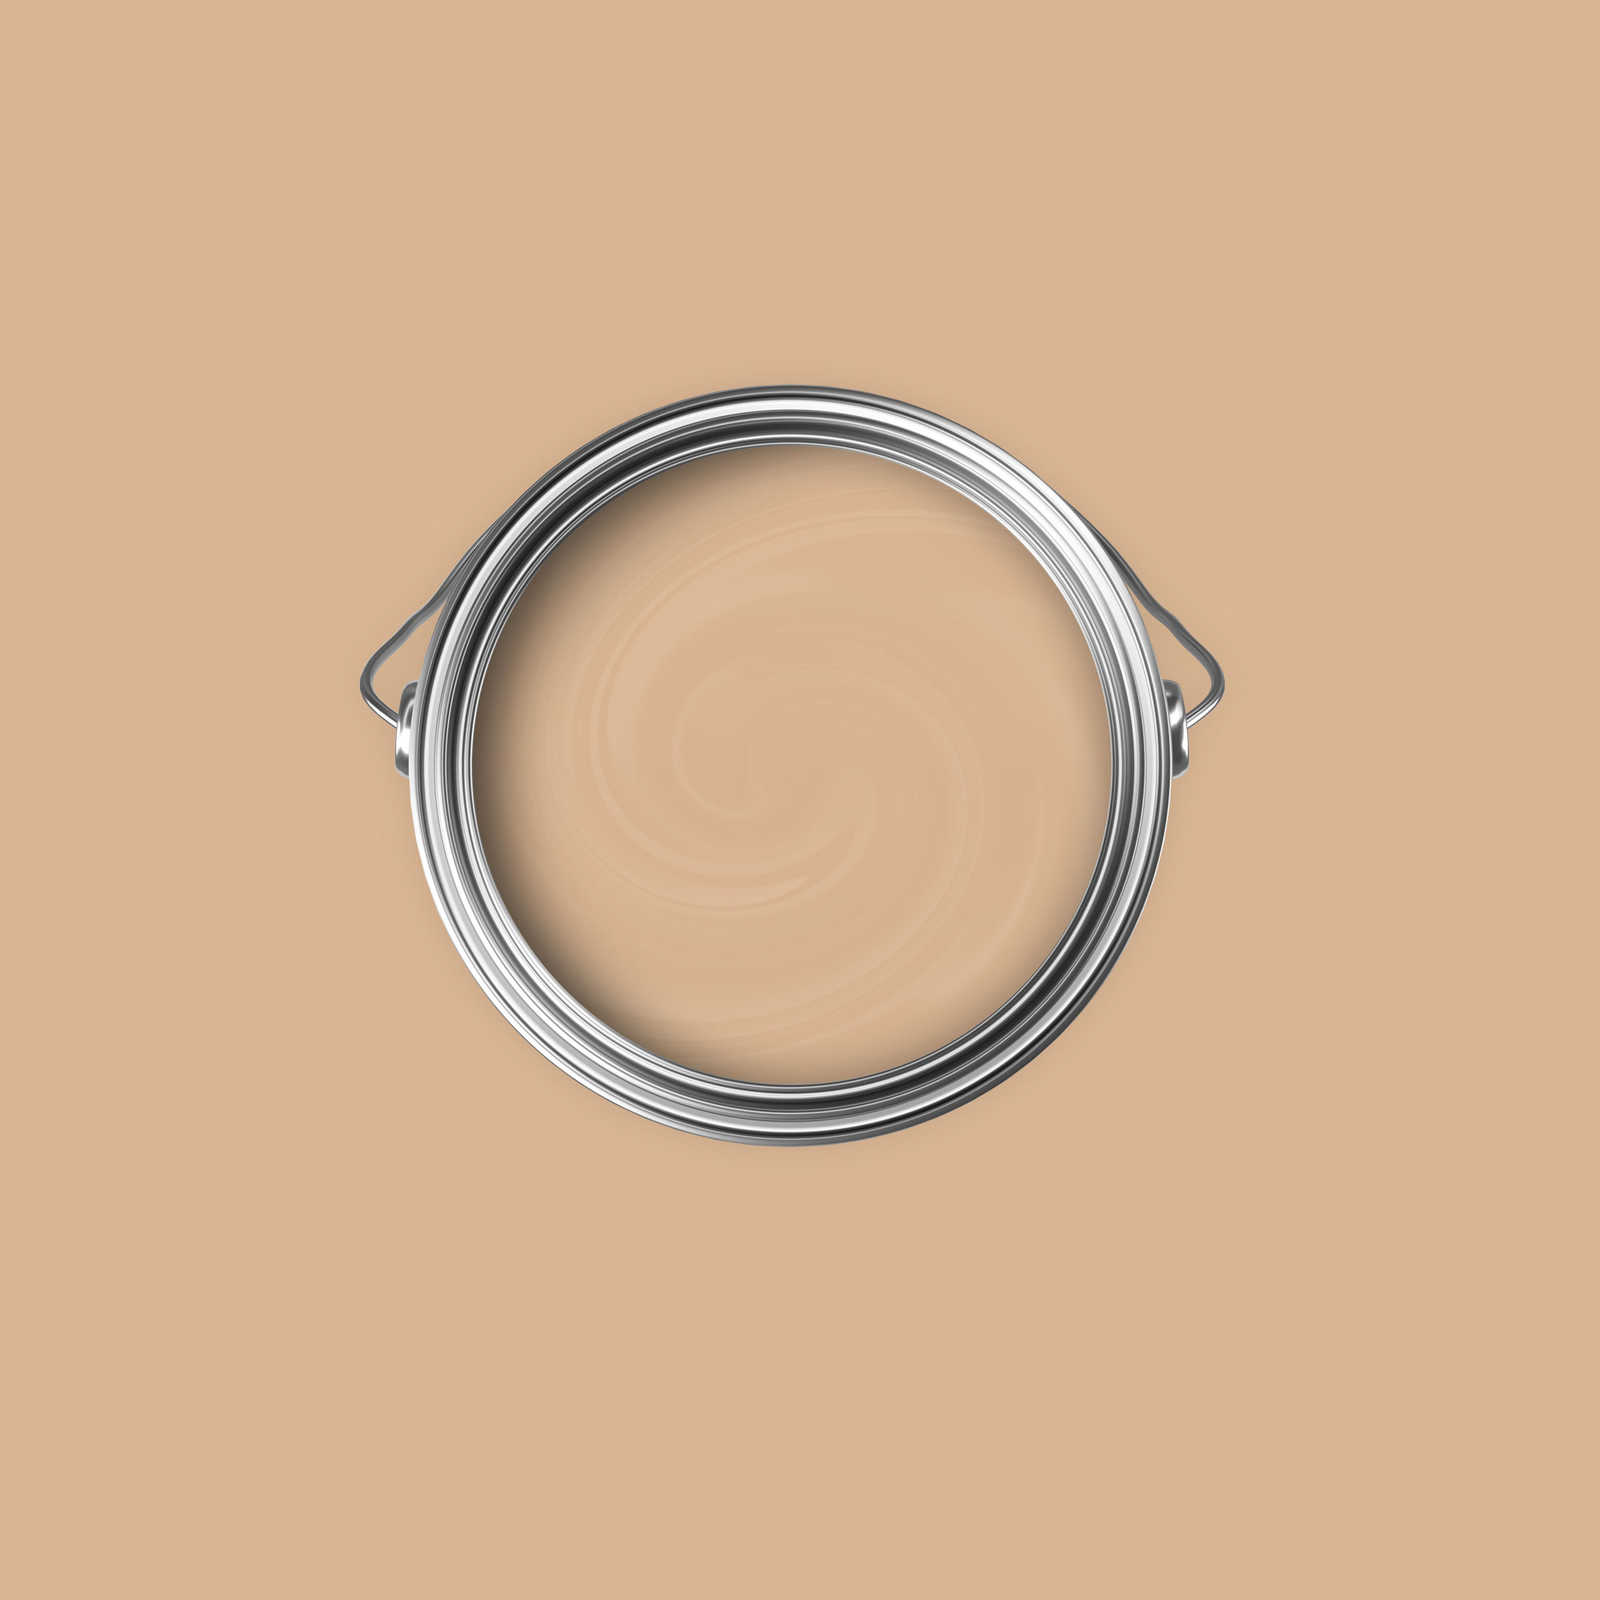             Premium Wall Paint cheerful light beige »Boho Beige« NW727 – 2,5 litre
        